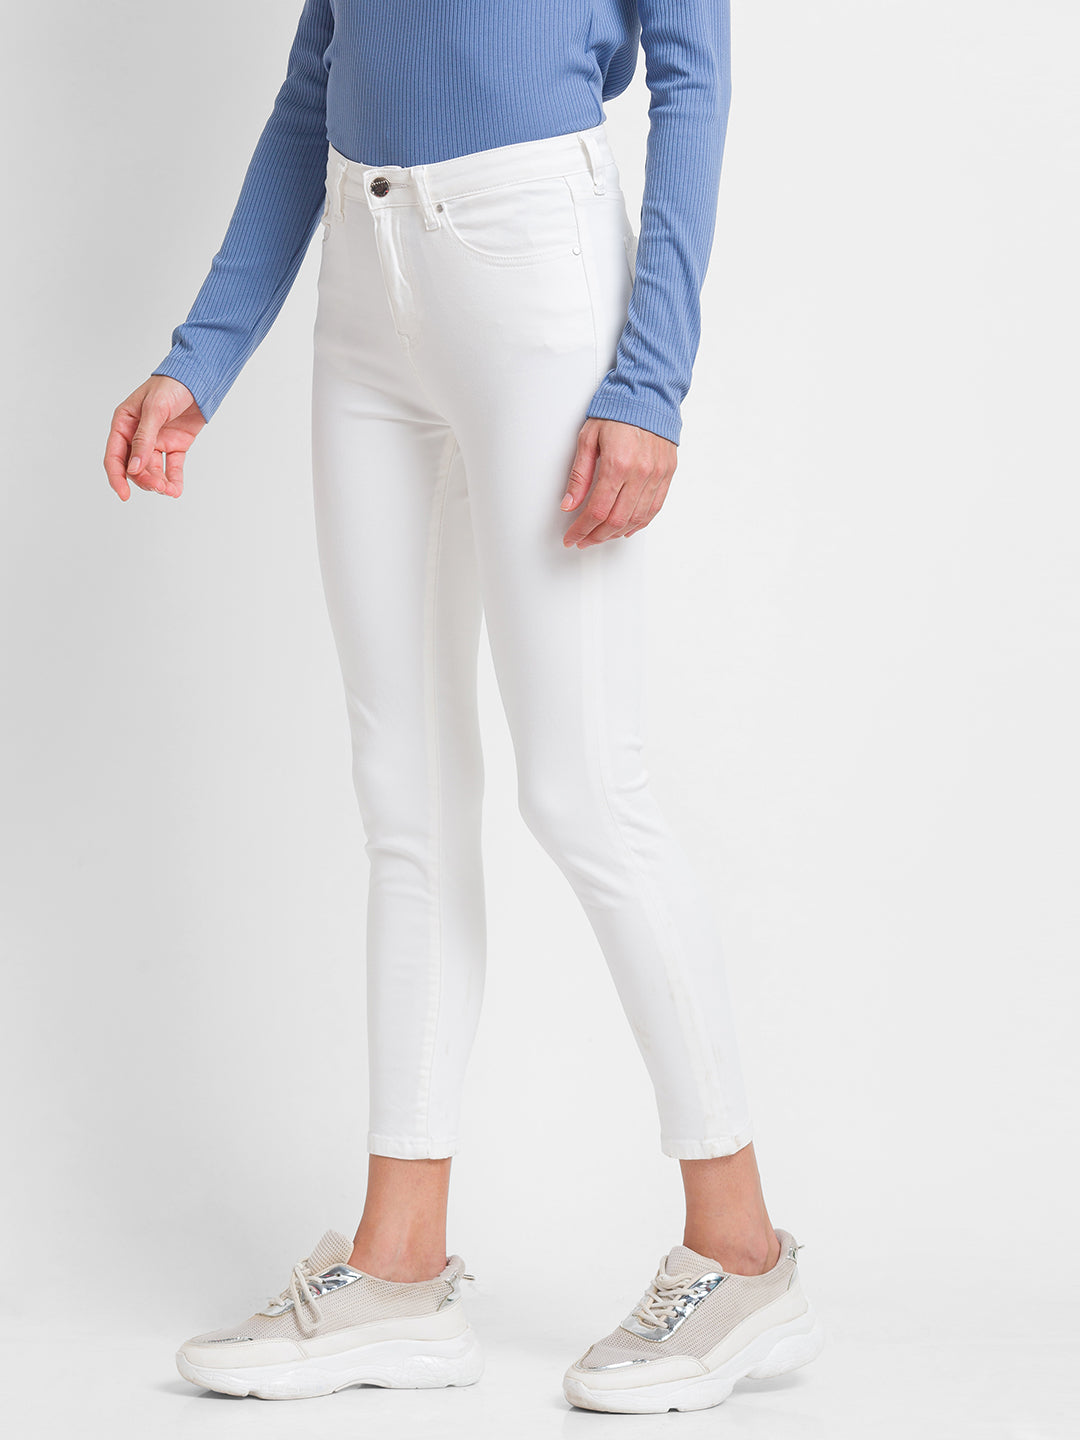 Buy Women White Skinny Fit Dark Wash Jeans Online - 739098 | Allen Solly